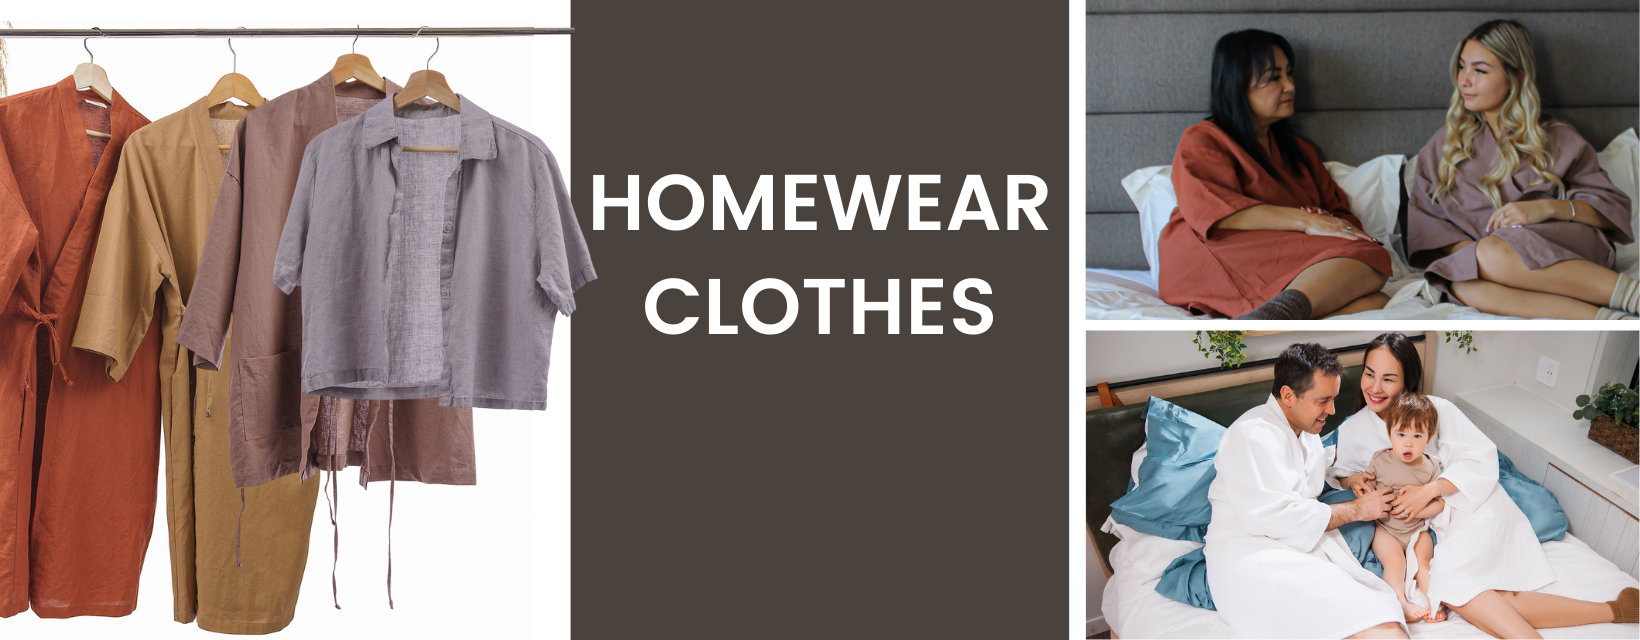 Homewear Clothes